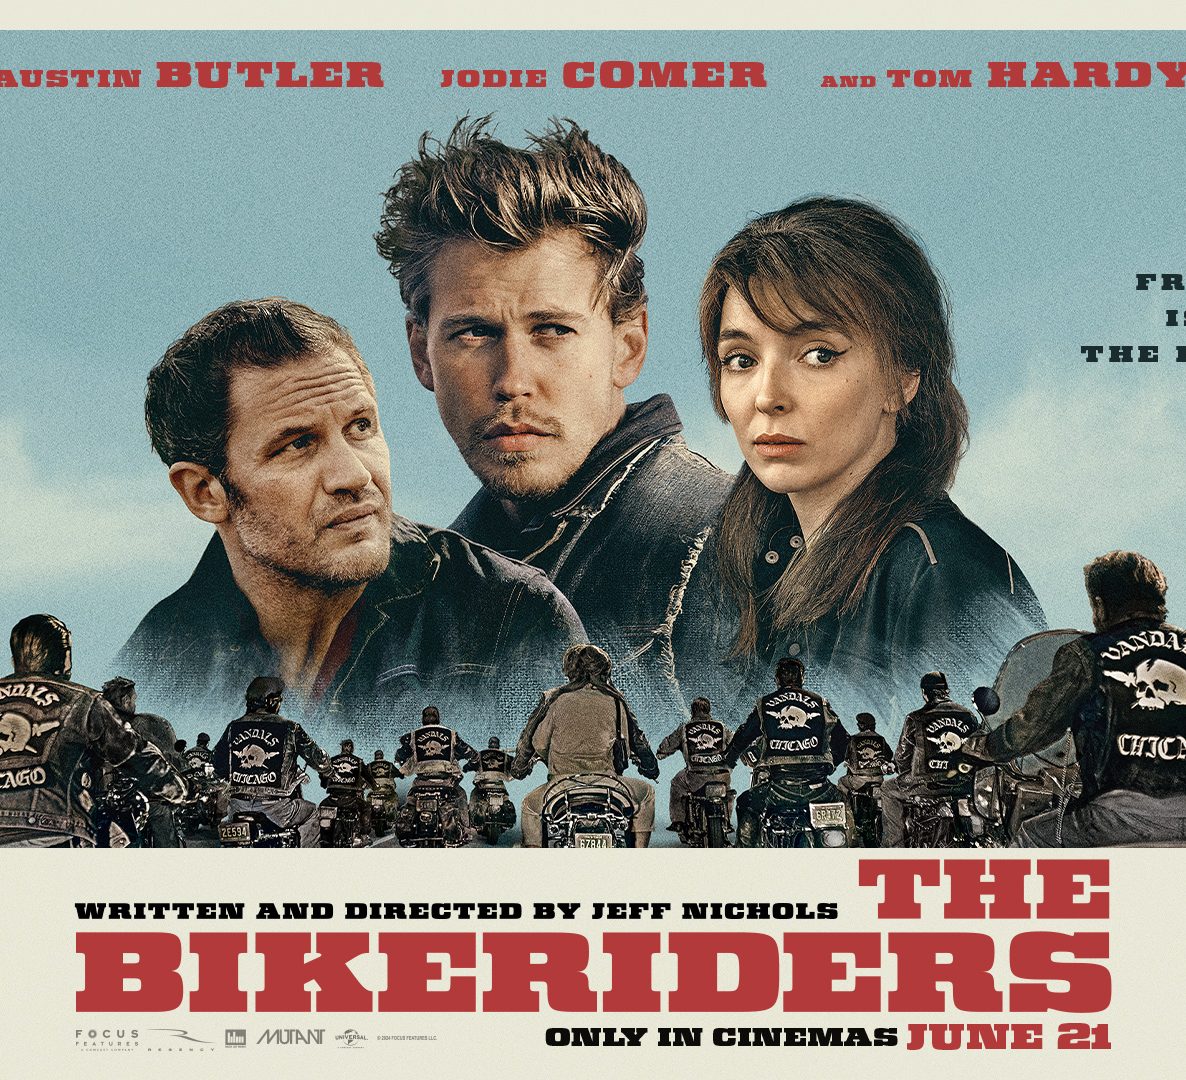 The bikeriders movie poster